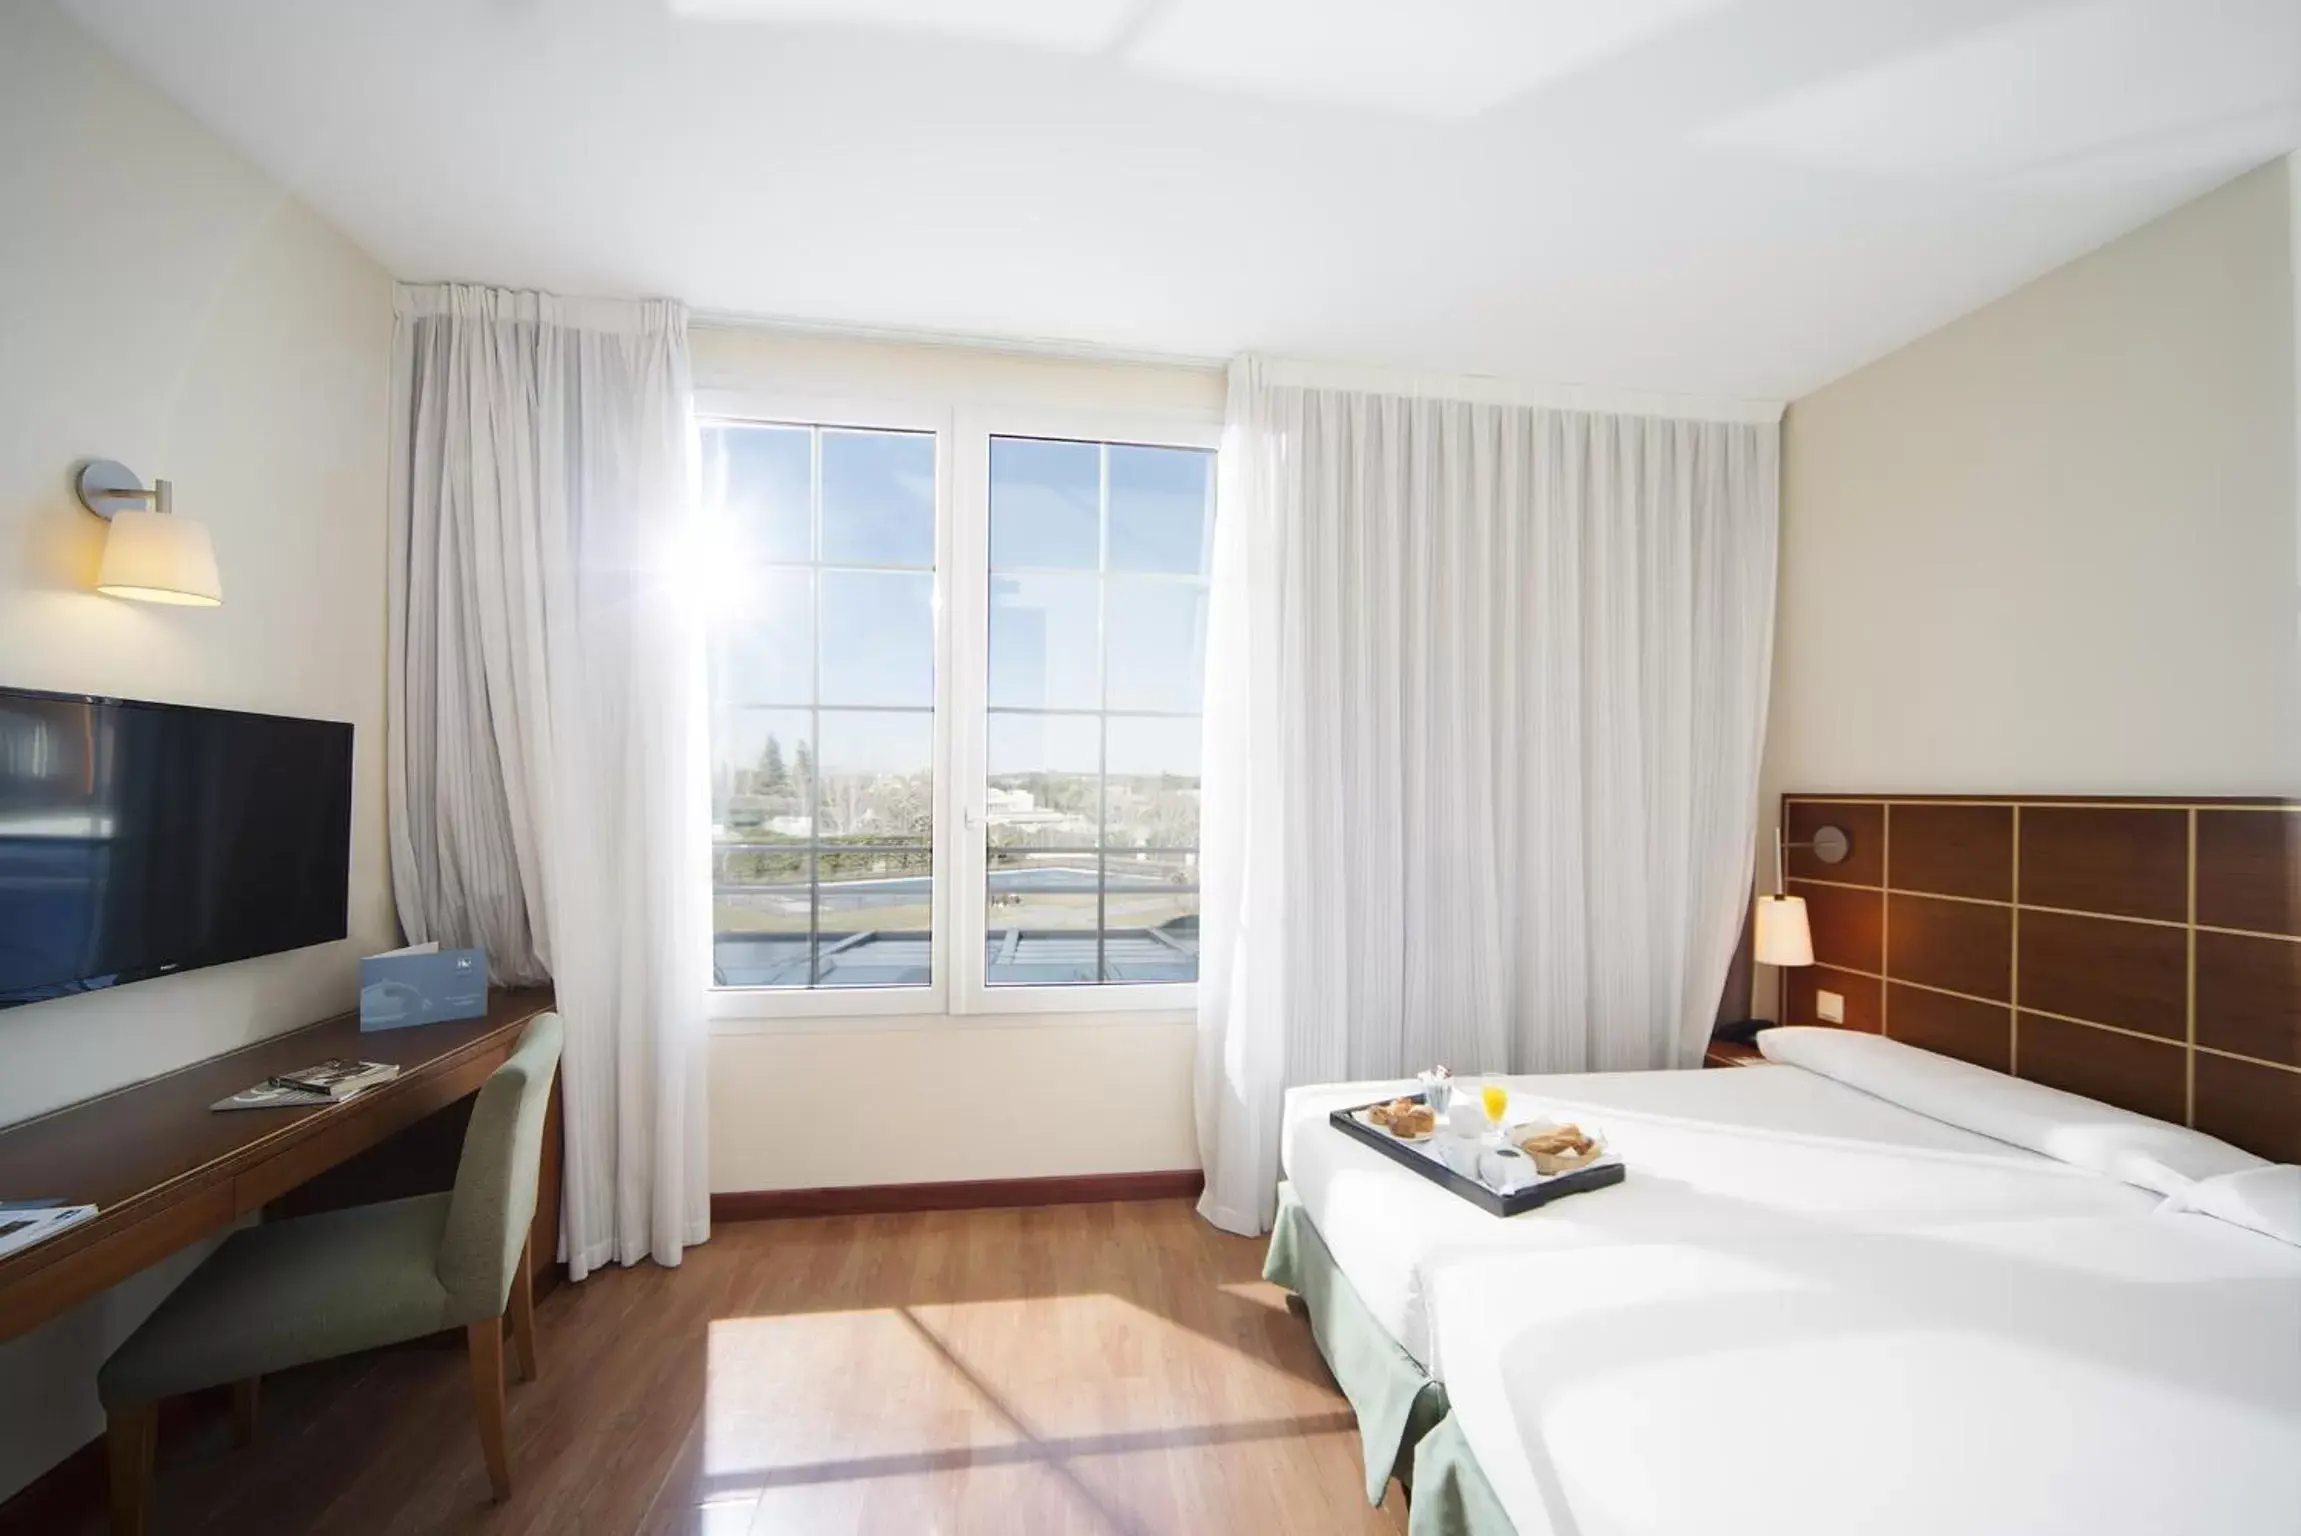 Bed, Room Photo in Eurostars Zarzuela Park Hotel